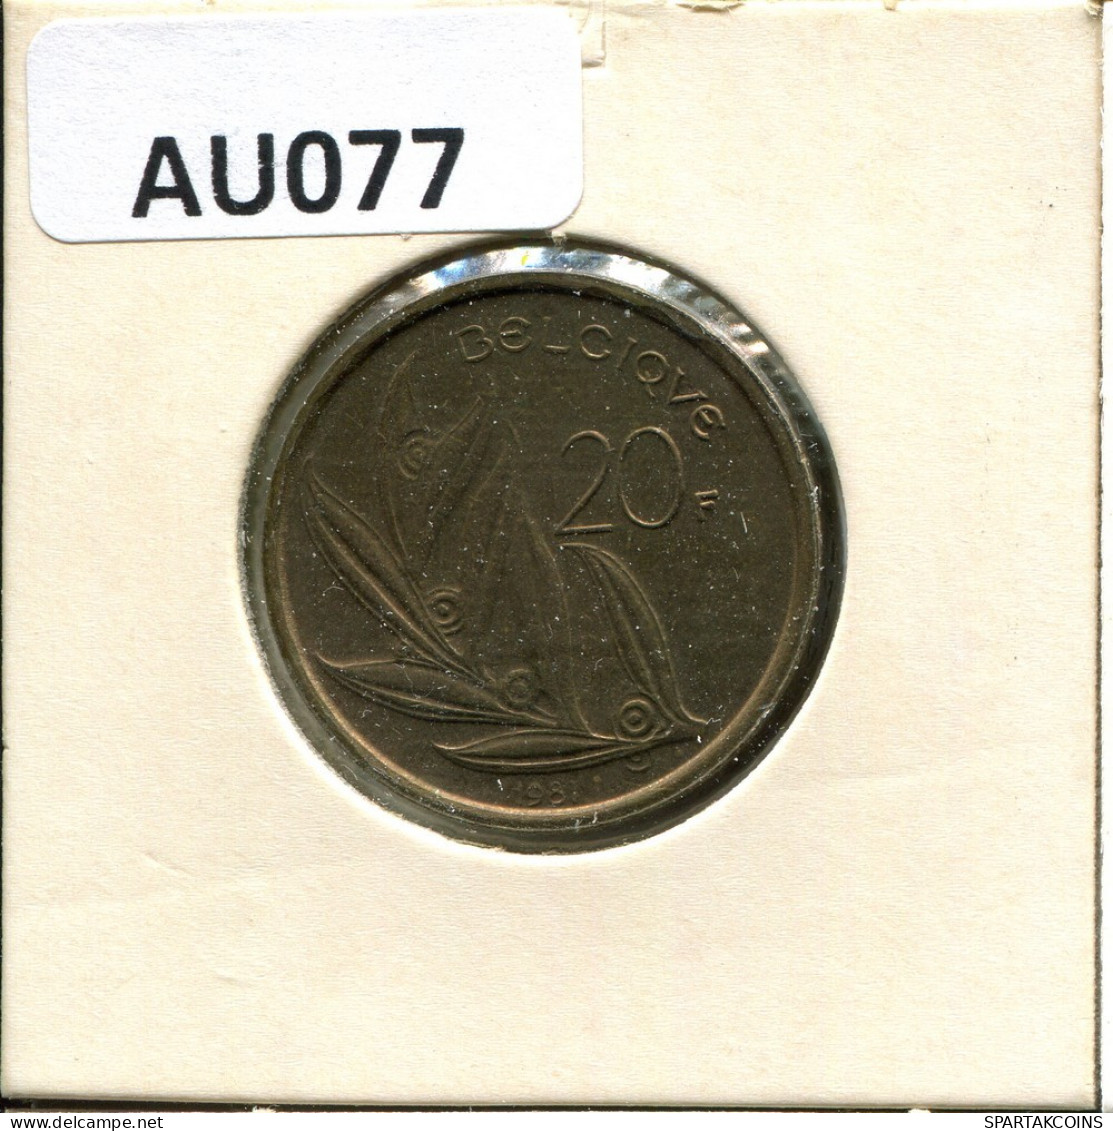 20 FRANCS 1981 FRENCH Text BELGIUM Coin #AU077.U.A - 20 Francs